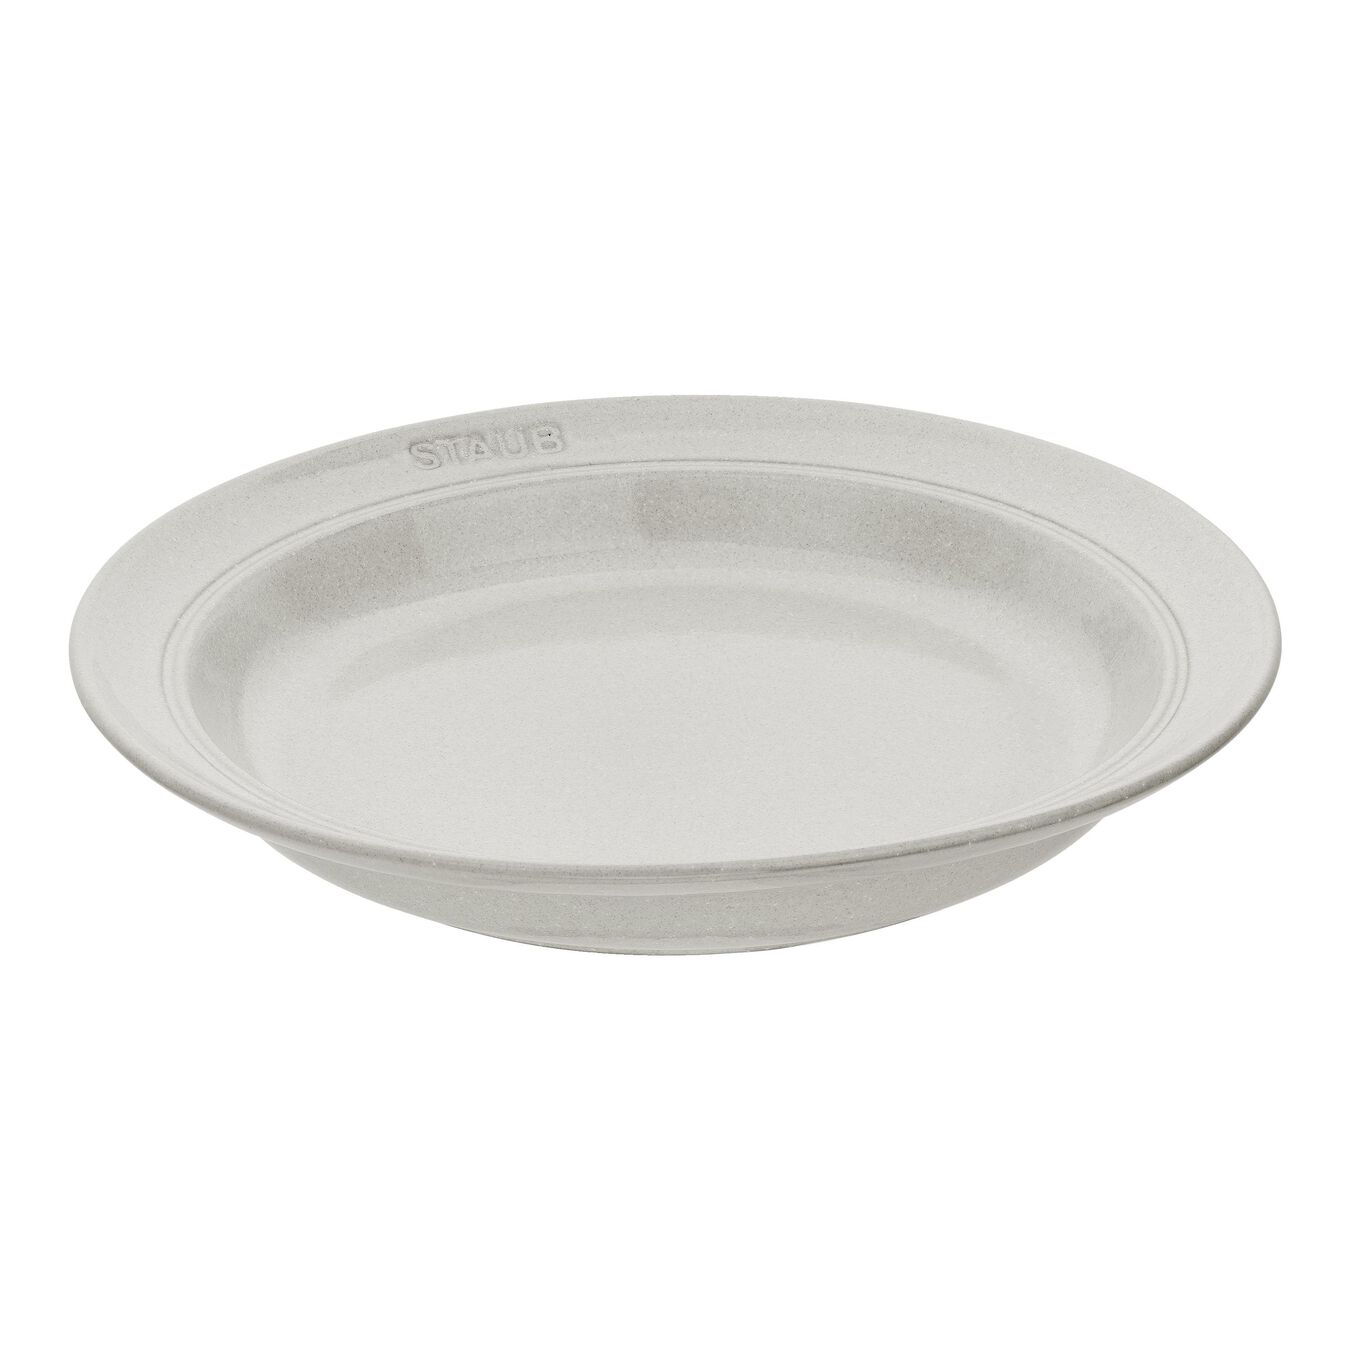 24 cm ceramic round Plate, white truffle,,large 1